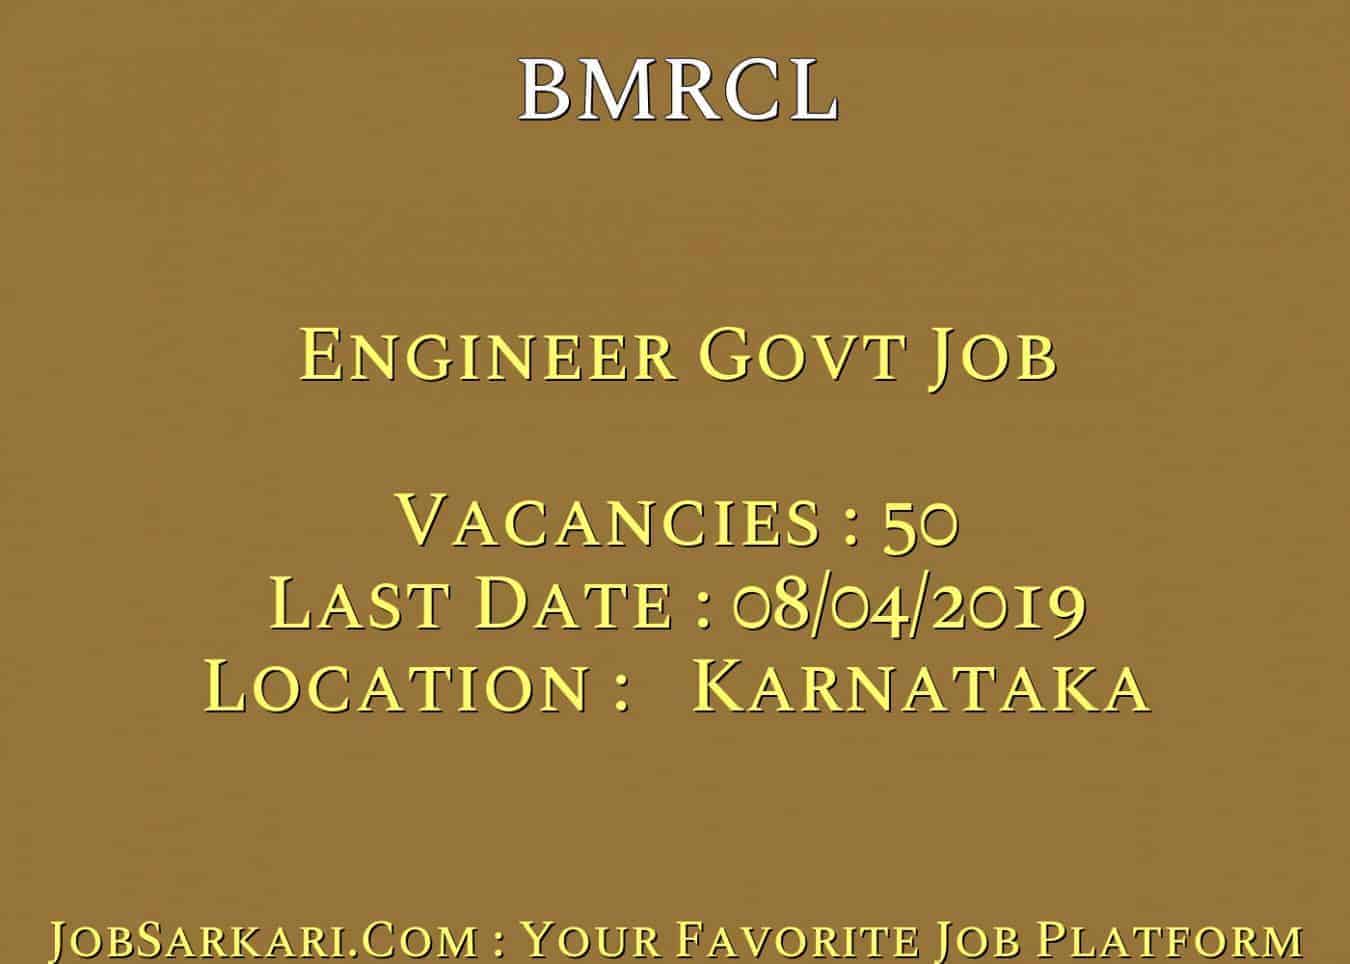 BMRCL Recruitment 2019 For Engineer Govt Job